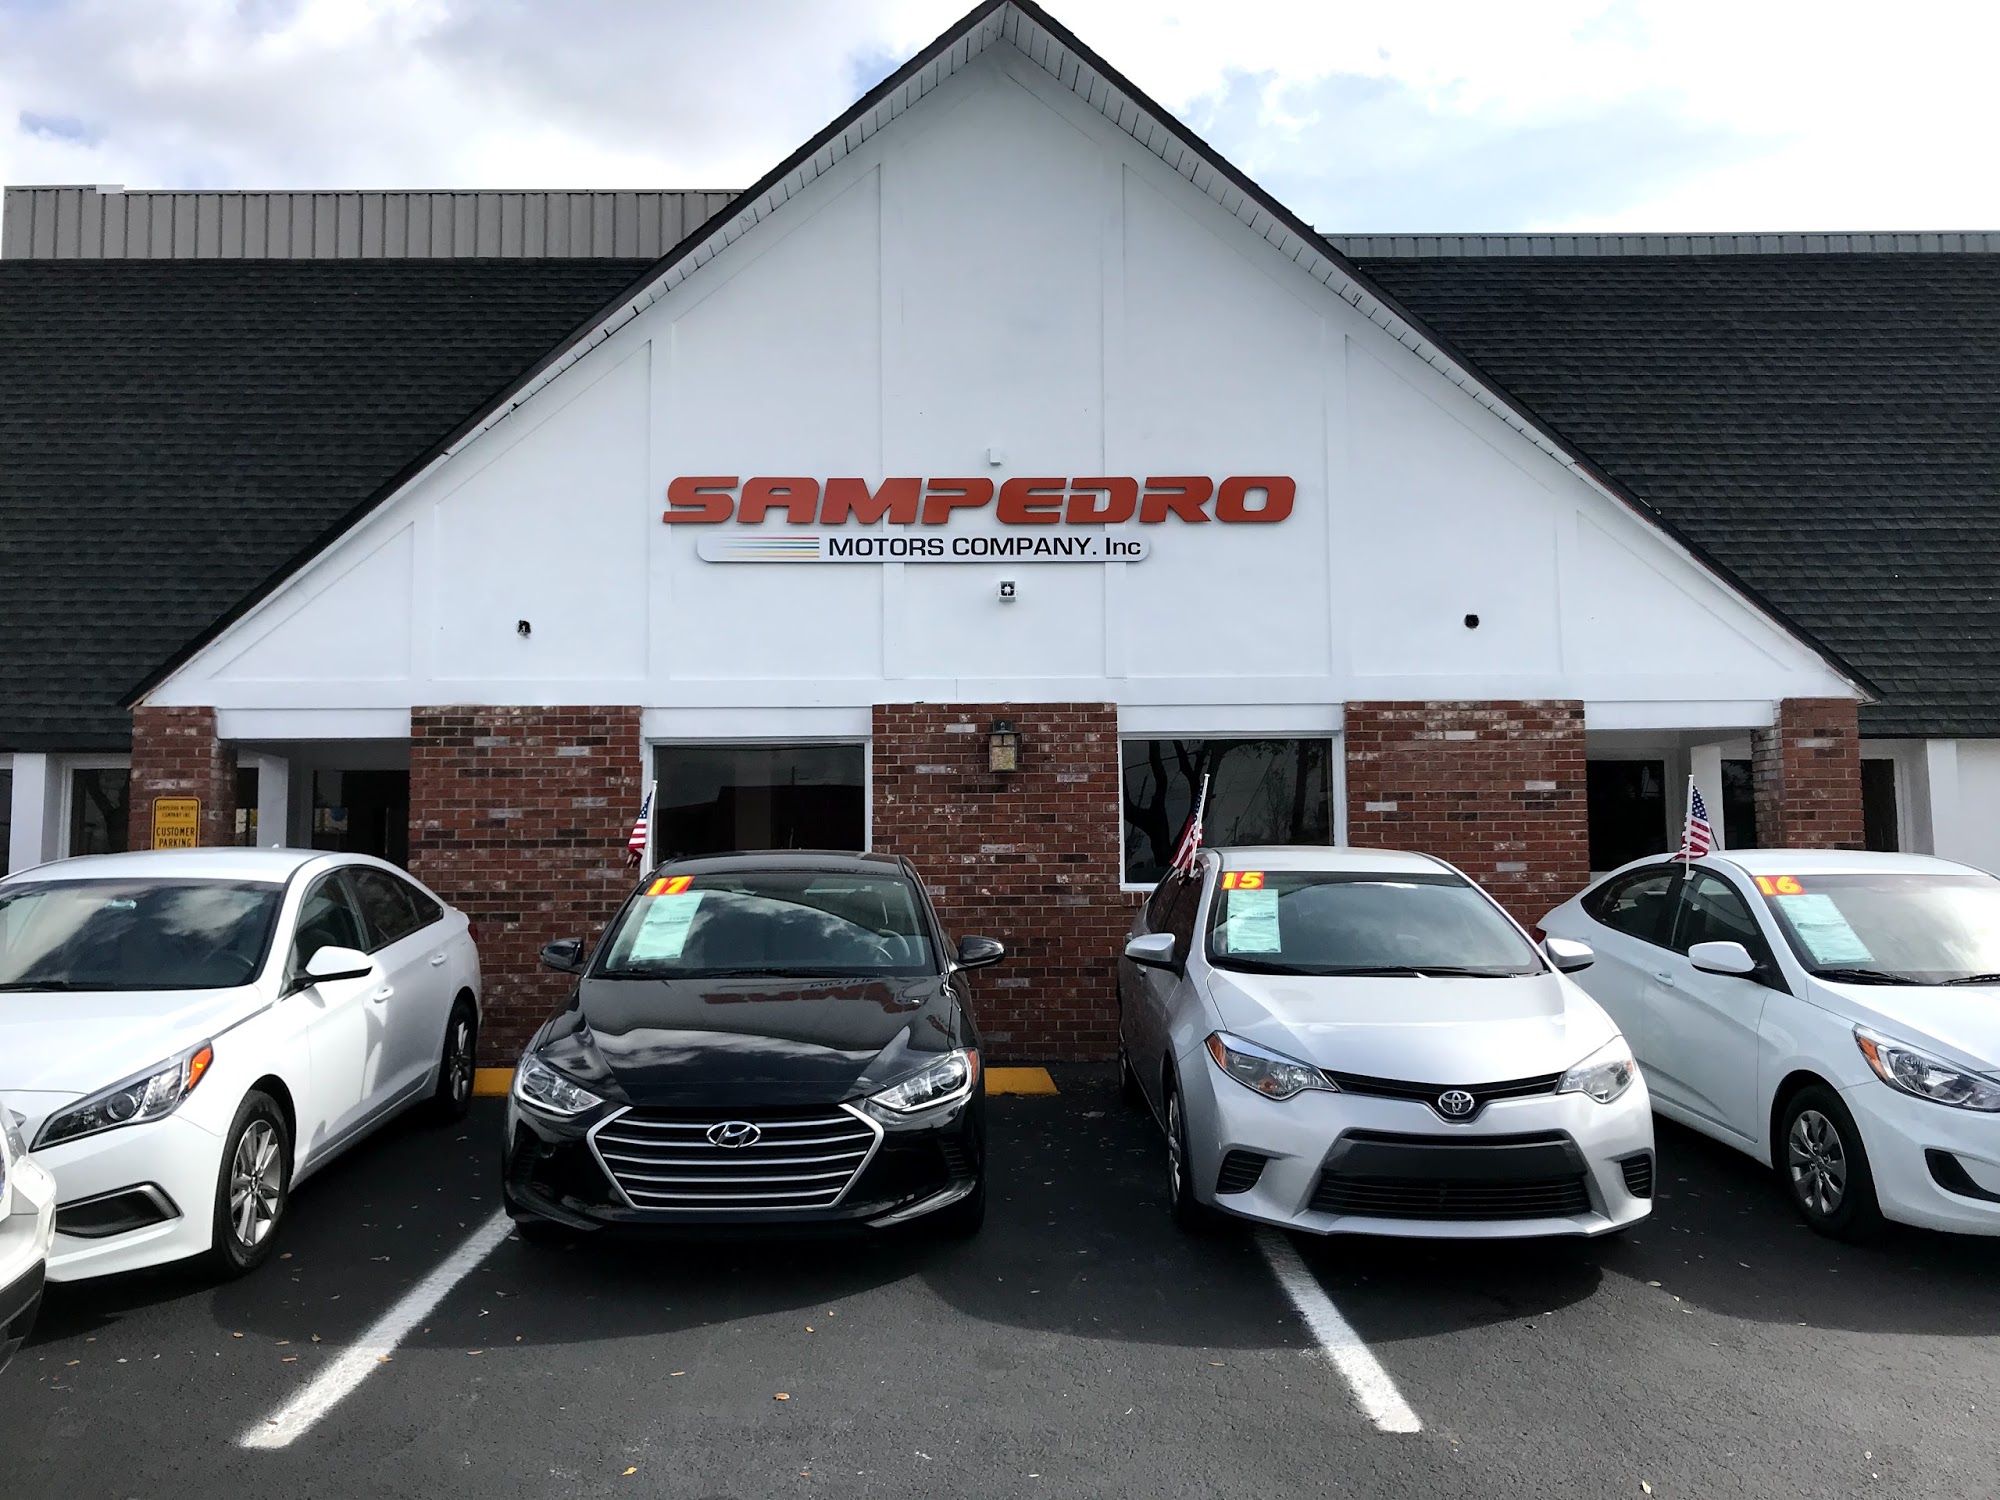 Sampedro Motors Company Inc.